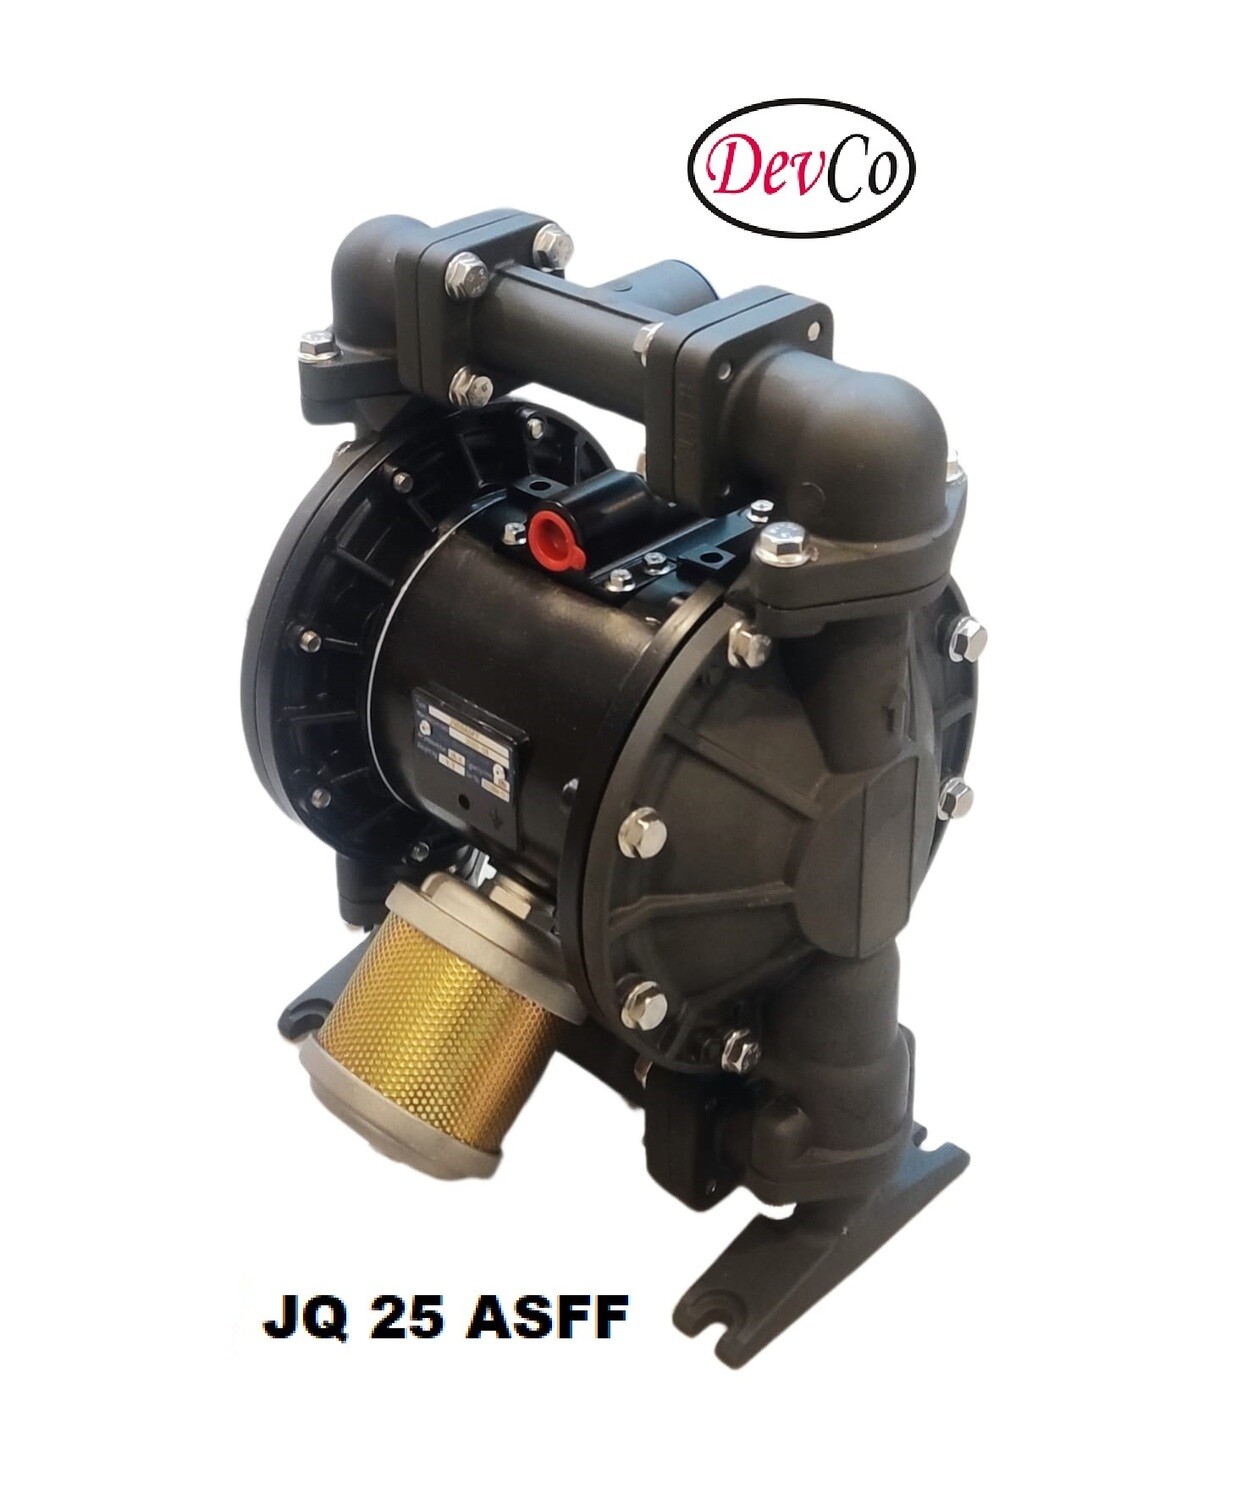 Diaphragm Pump JQ 25 ASFF Pompa Diafragma Devco 1"